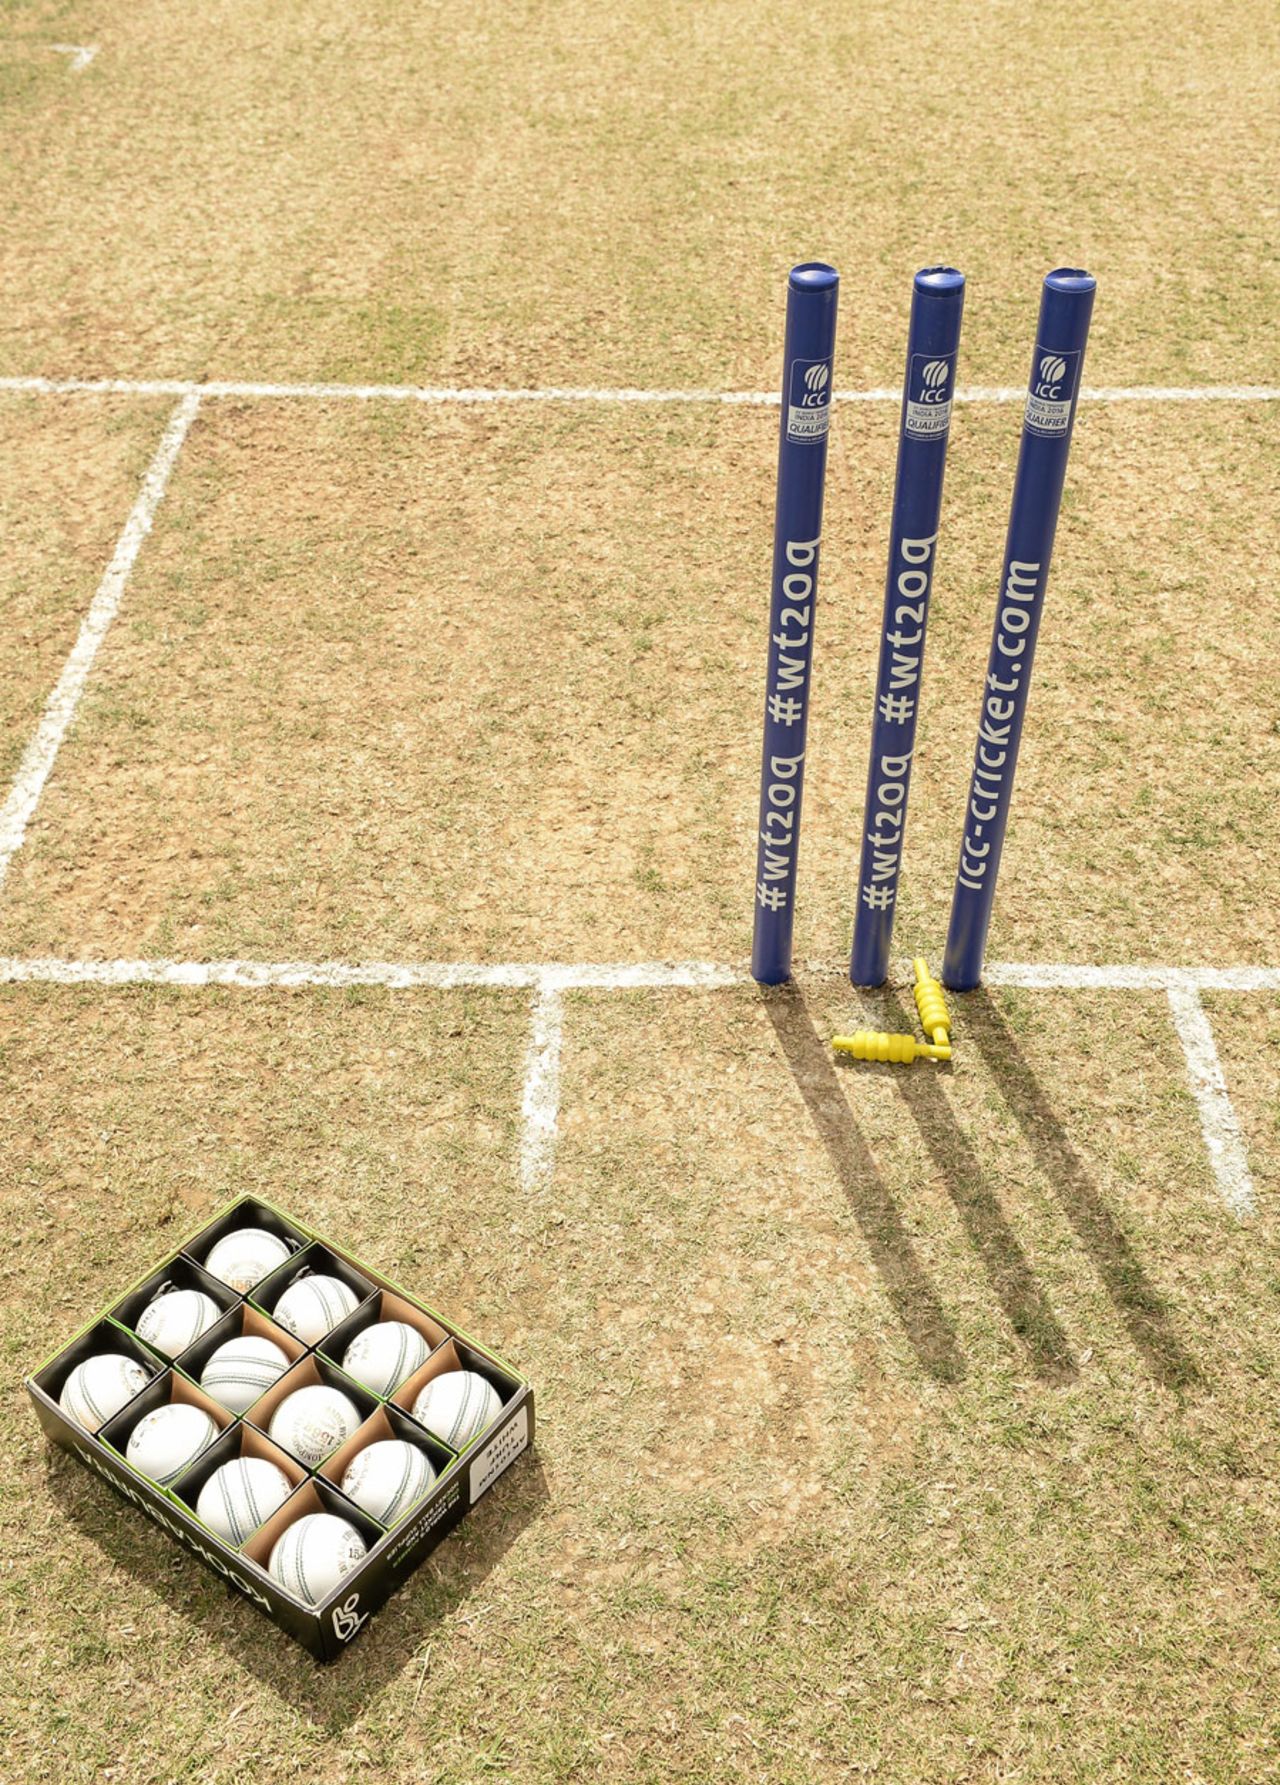 A generic shot of the stumps, bails and the set of balls, Hong Kong v USA, World Twenty20 Qualifier, Group A, Dublin, July 18, 2015